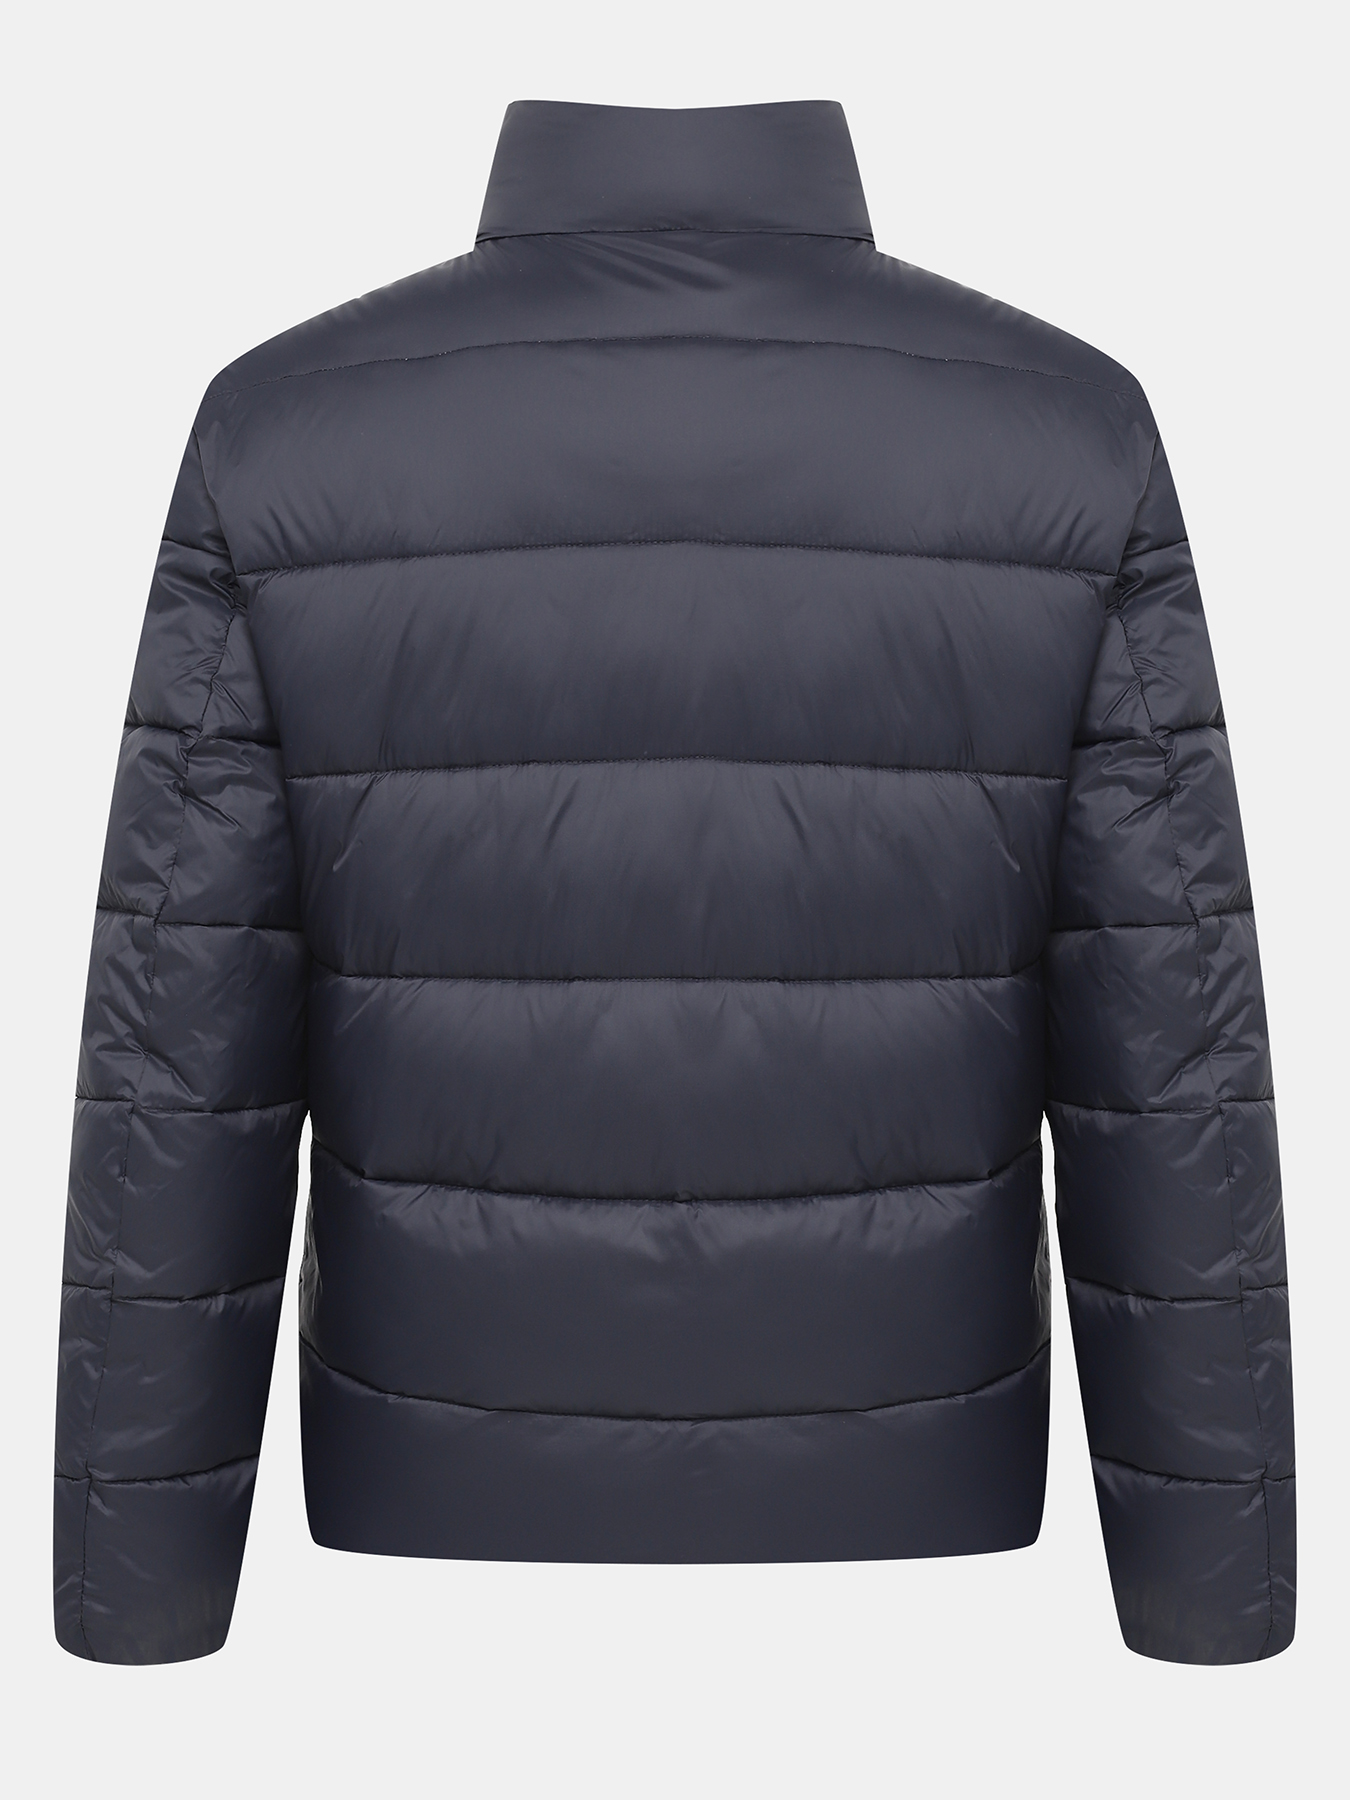 Куртка Balto HUGO 427437-043, цвет темно-синий, размер 48-50 - фото 2